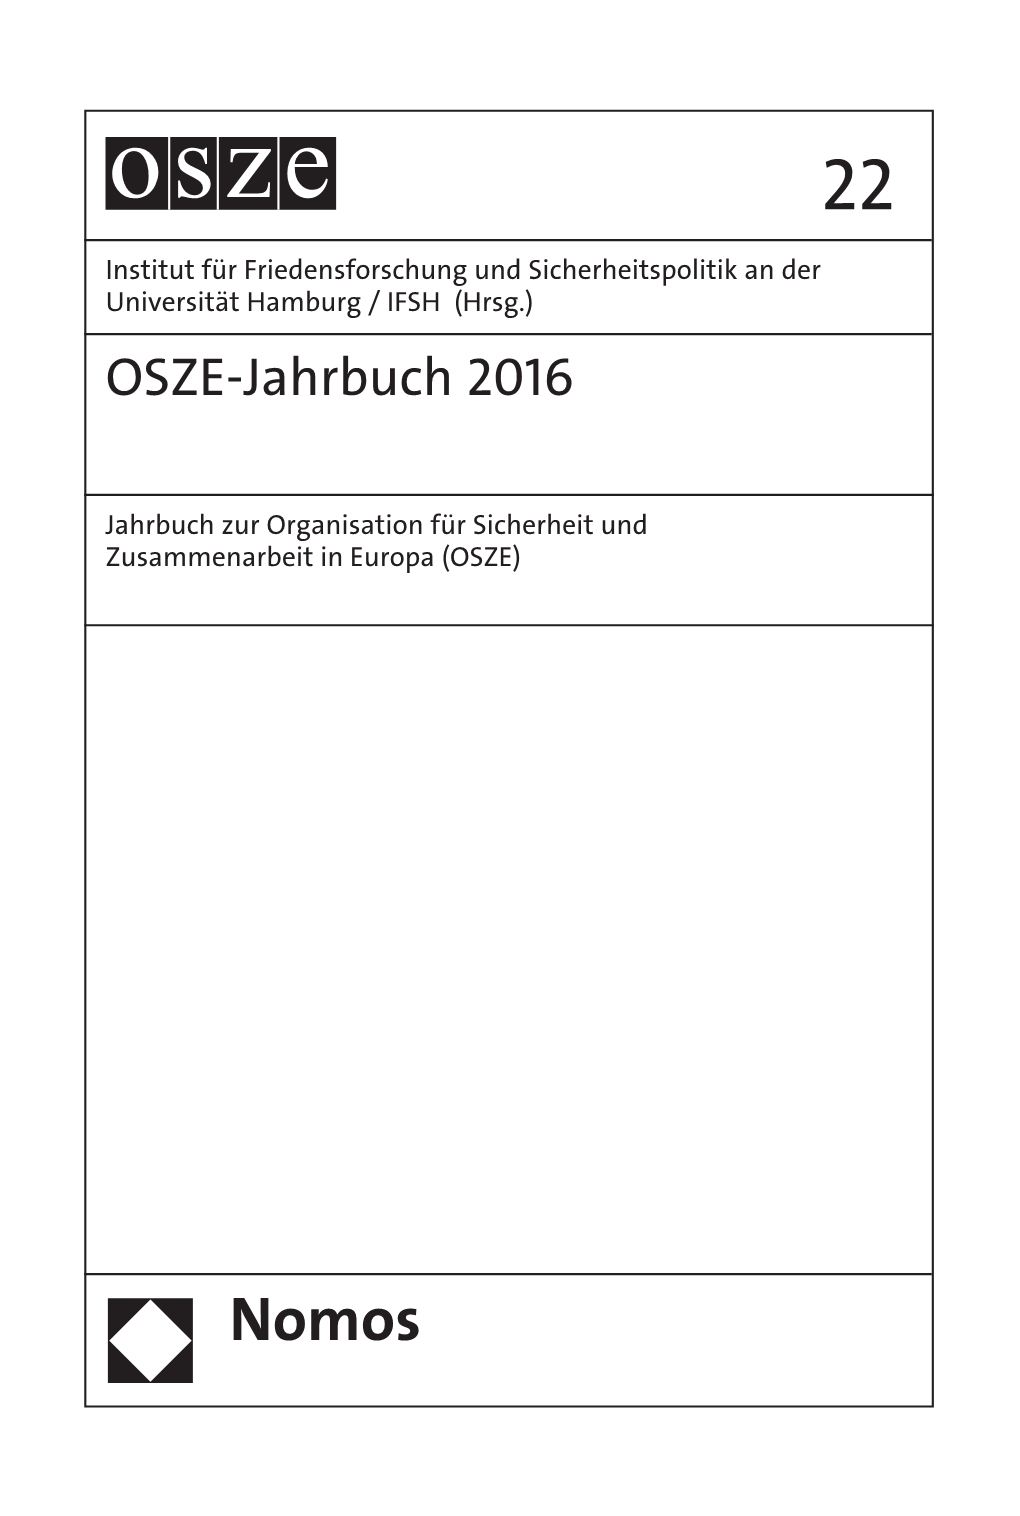 OSZE-Jahrbuch 2016